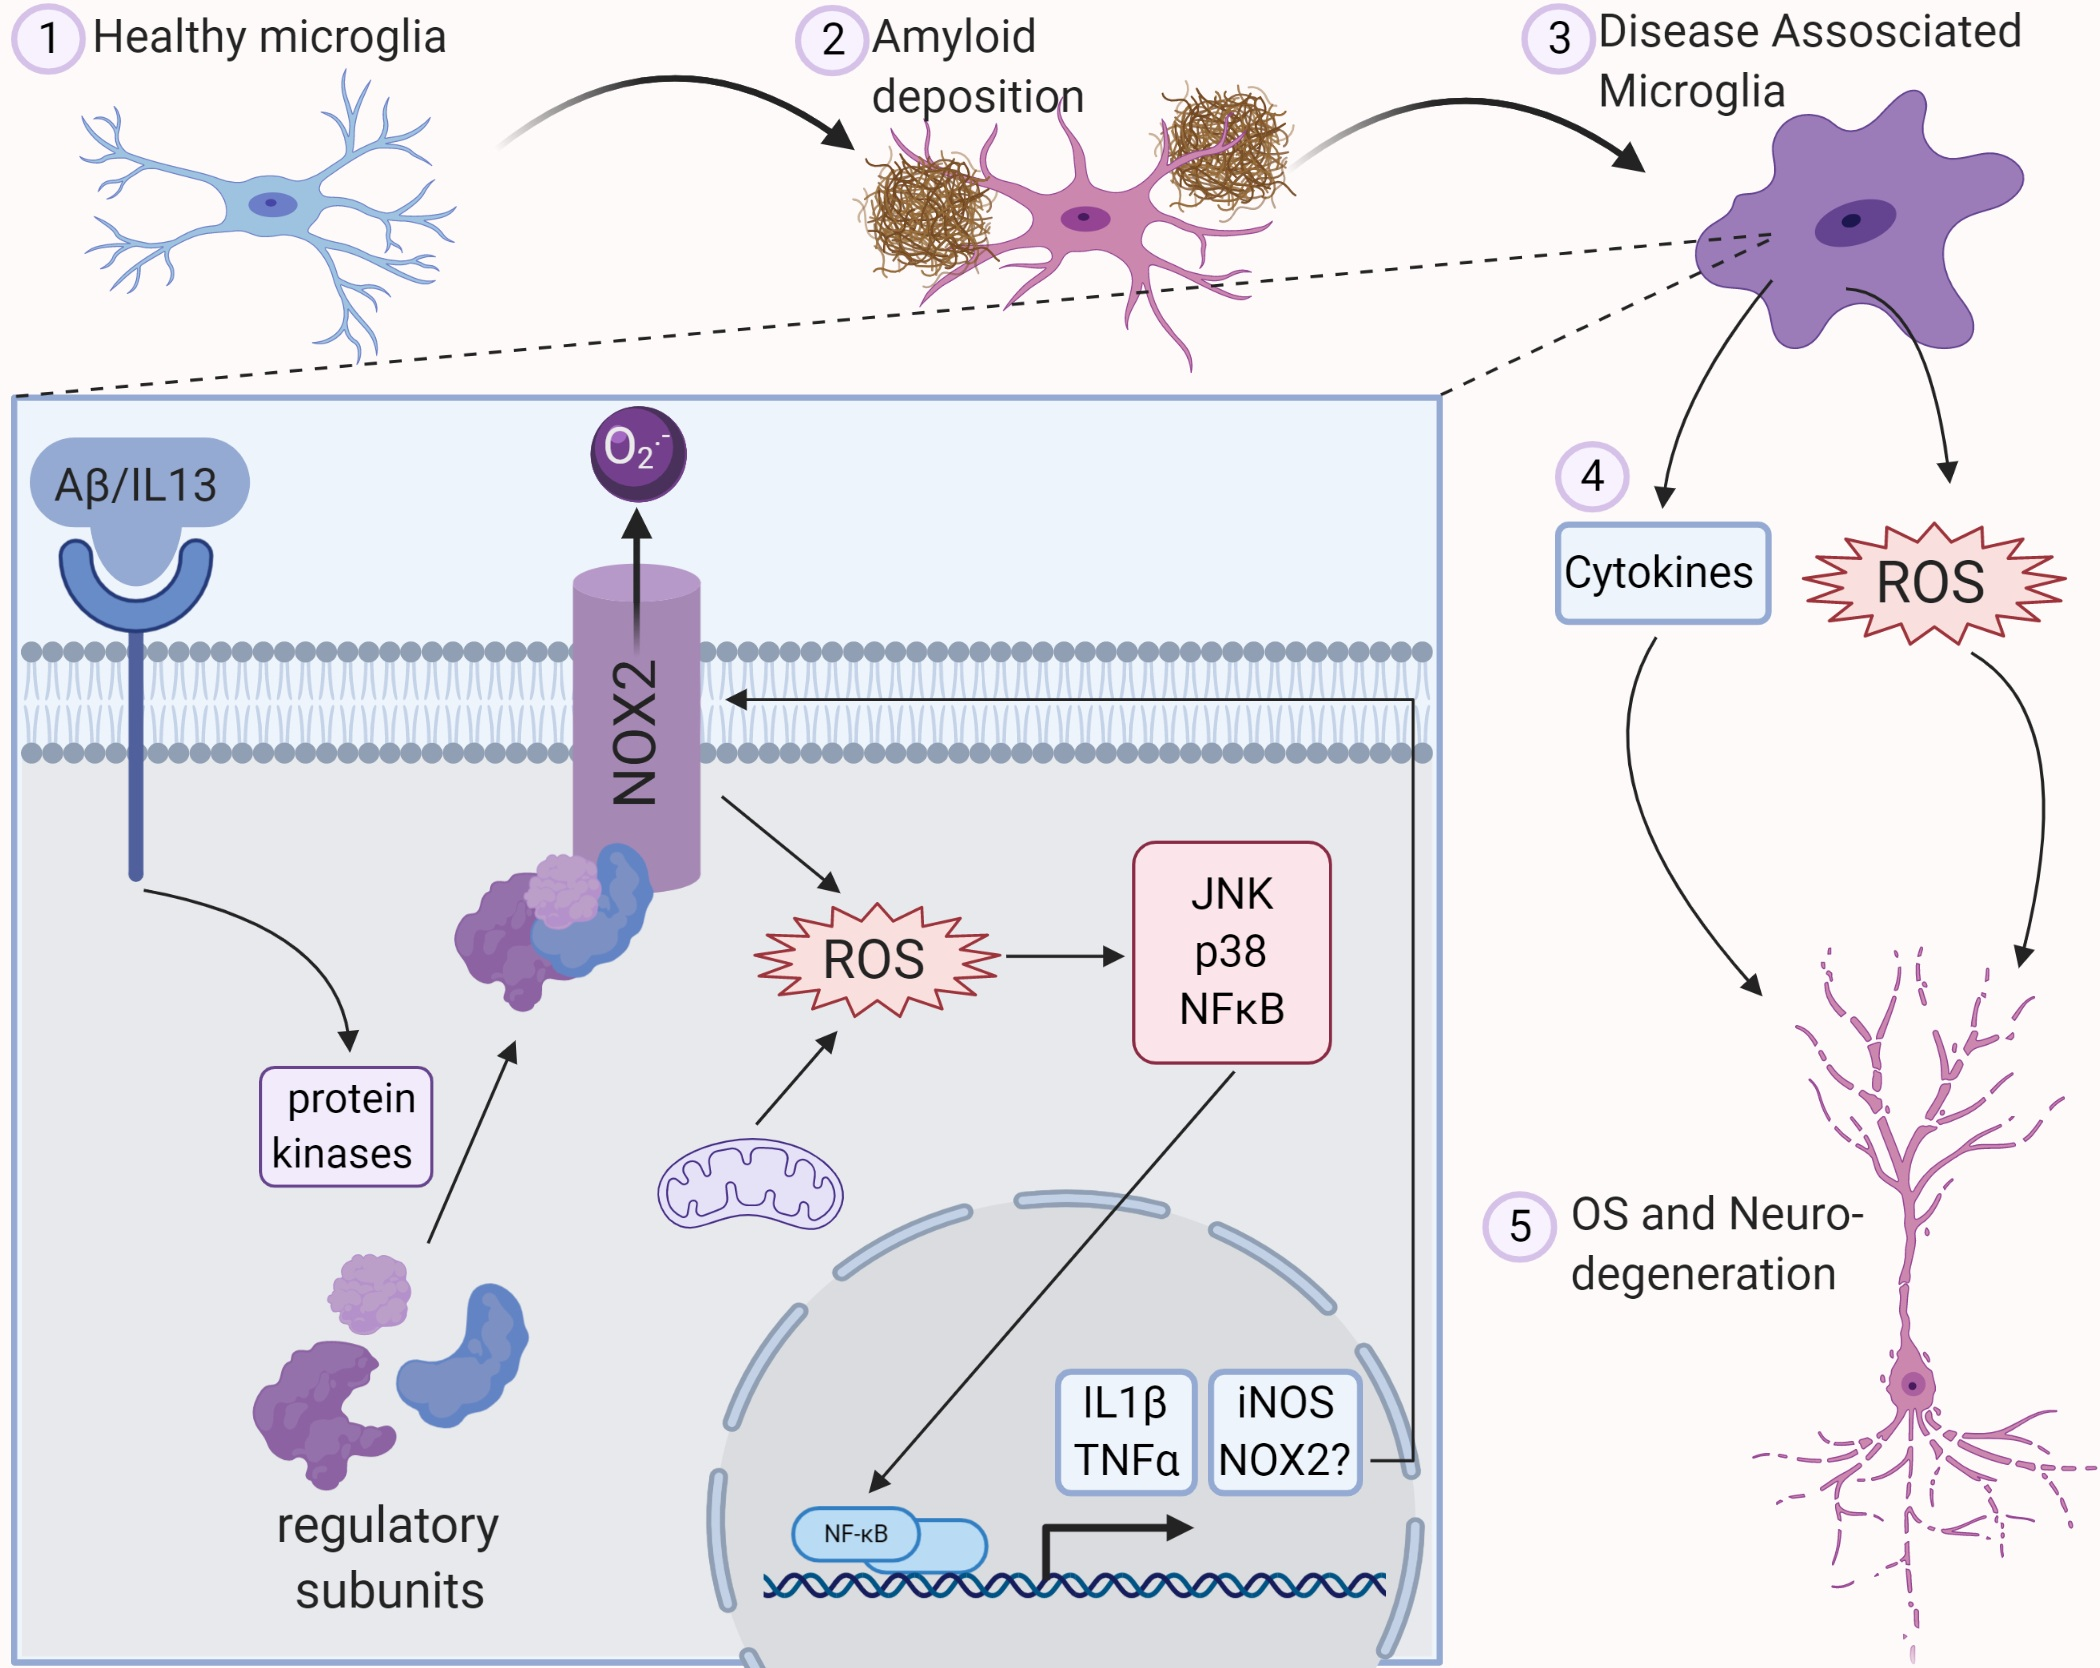 ROS Generation in Microglia: Understanding Oxidative Stress and Inflammation in Neurodegenerative Disease